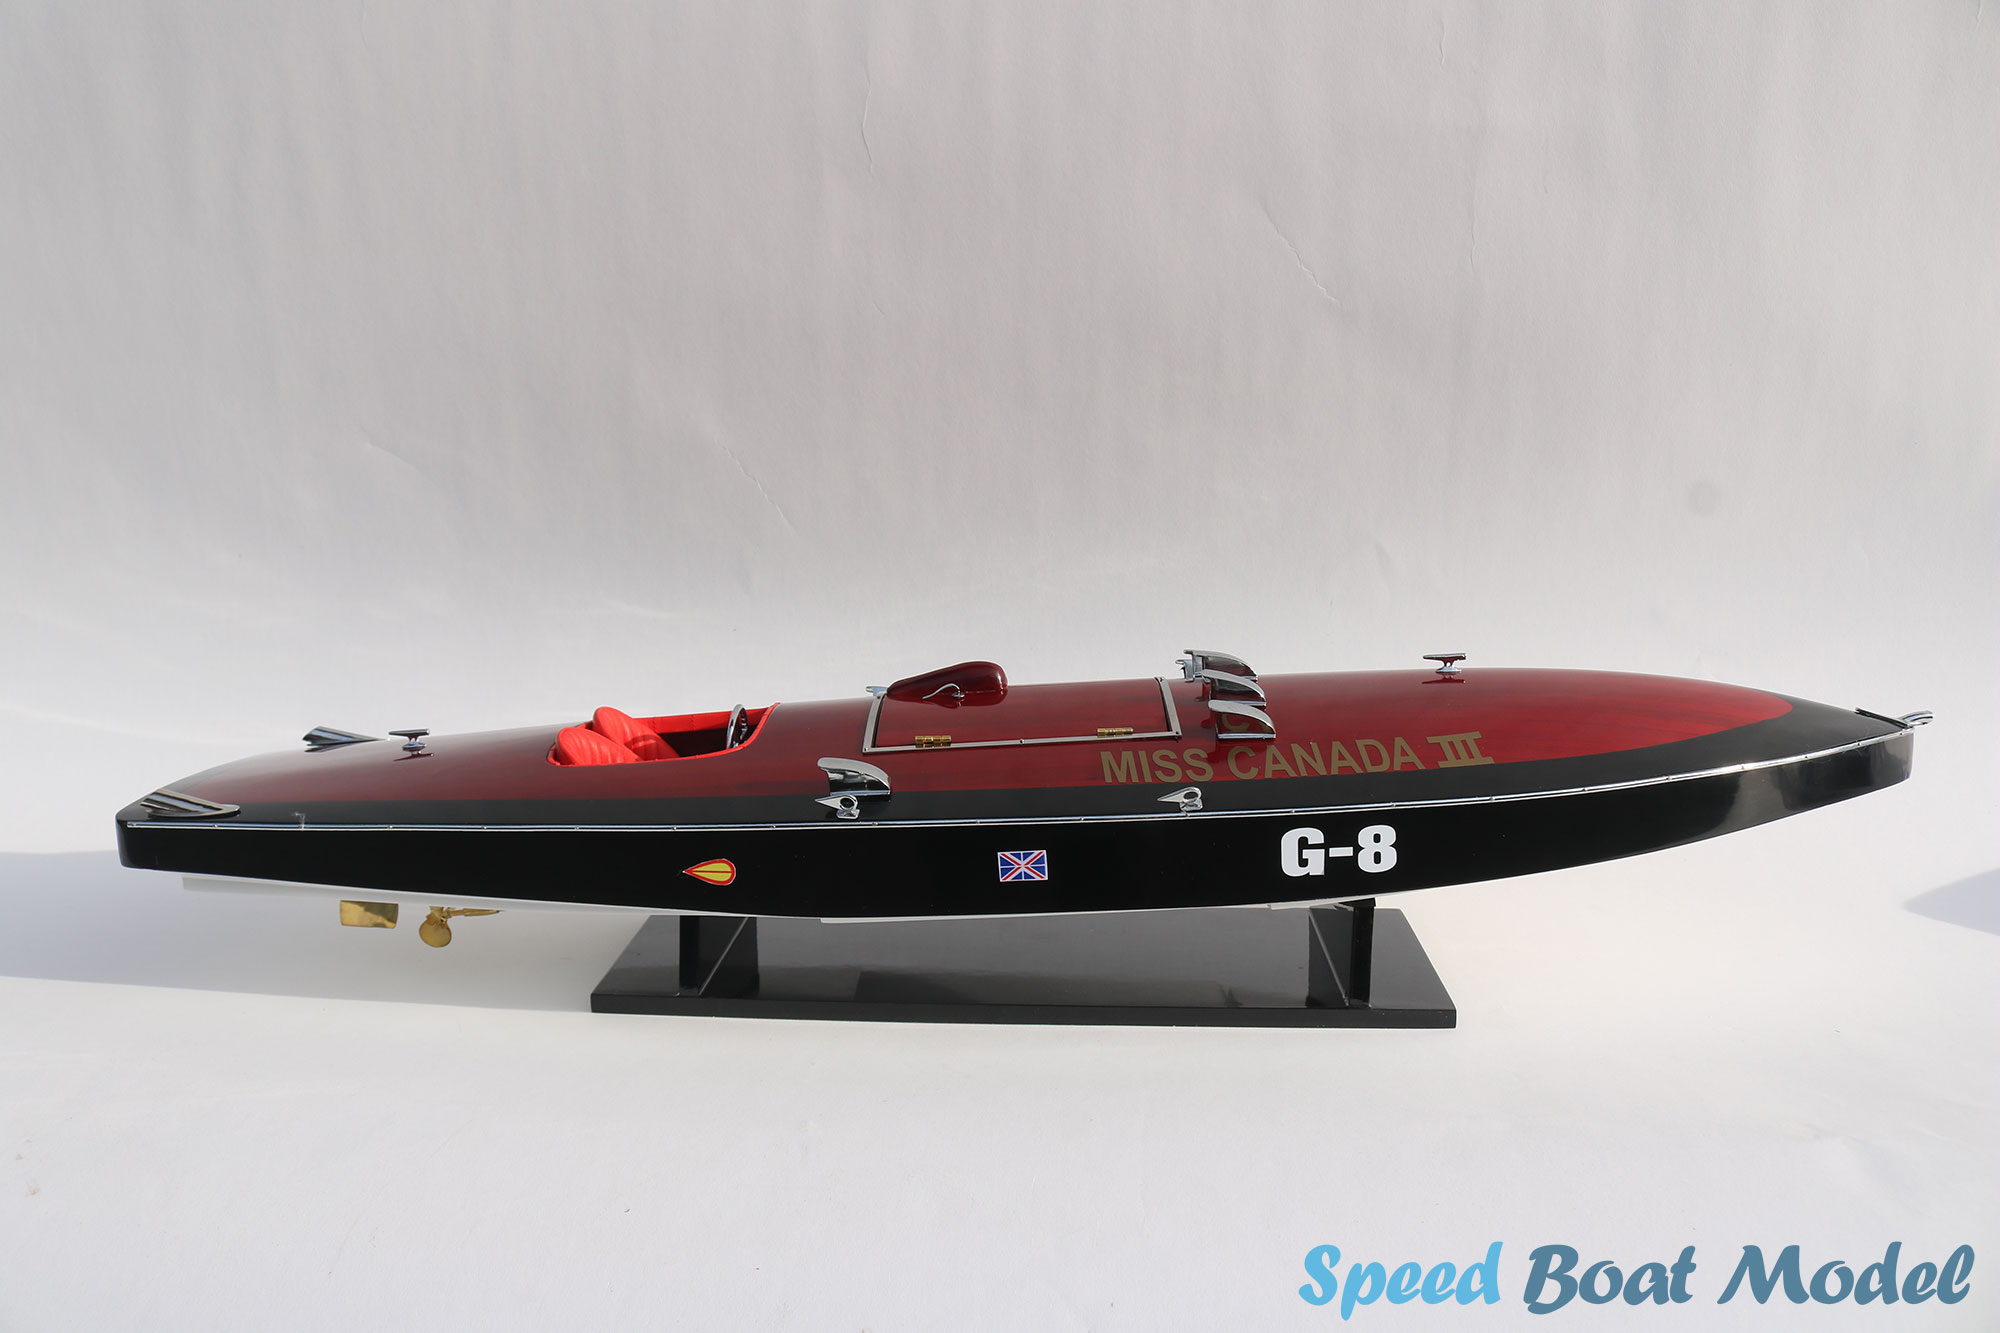 Miss Canada Iii Classic Boat Model 33.4